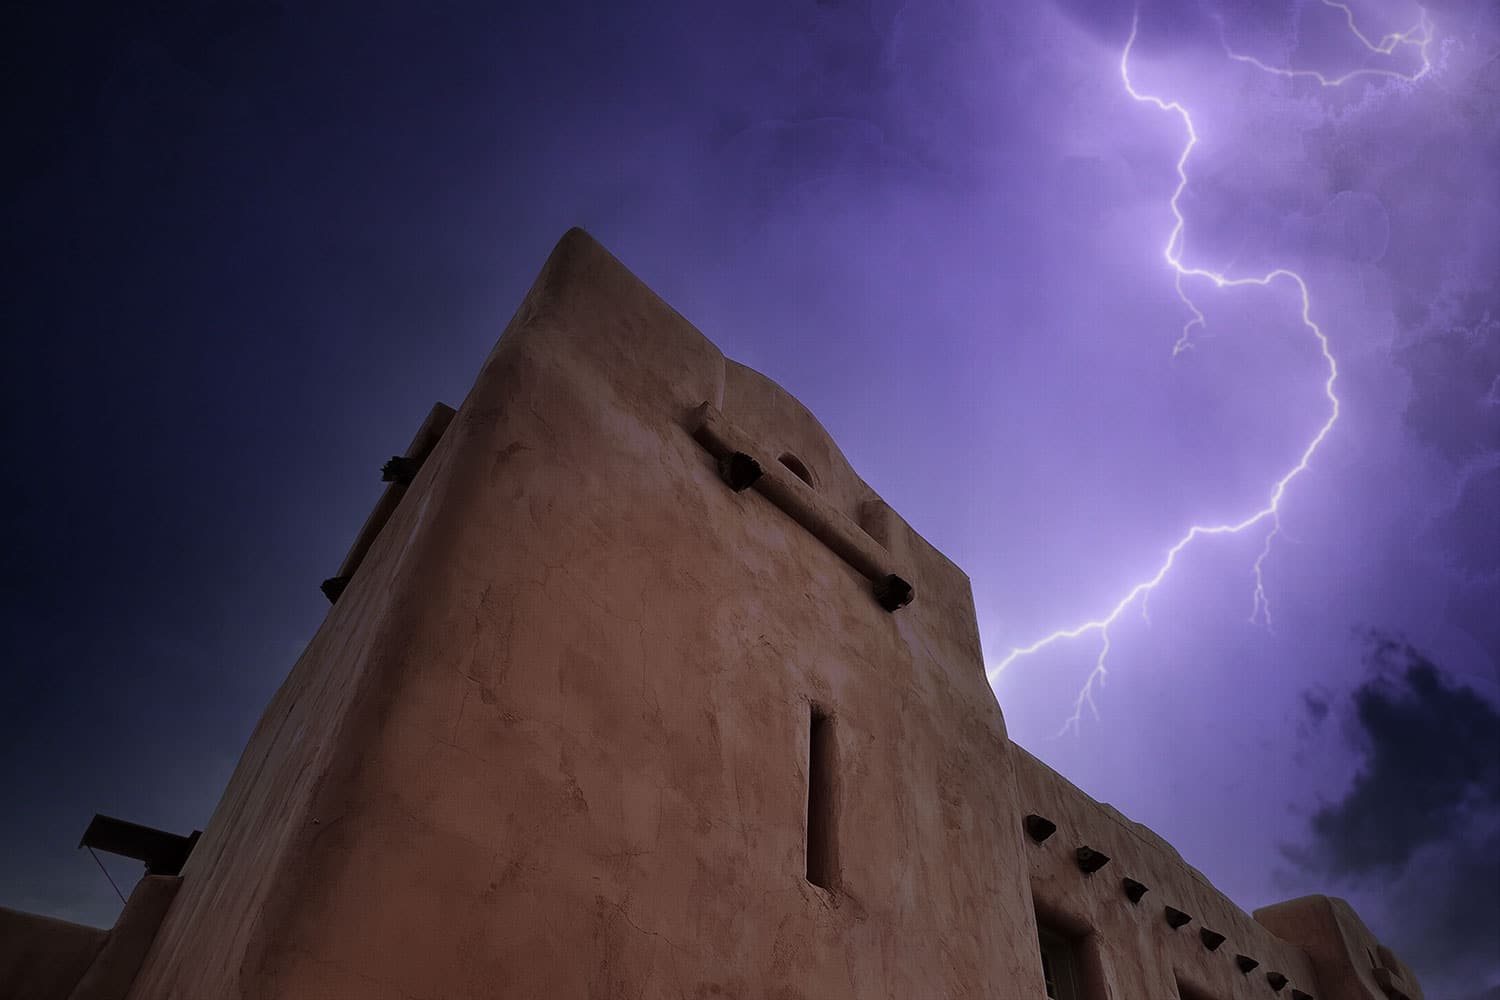 Lightning strikes by Barker building